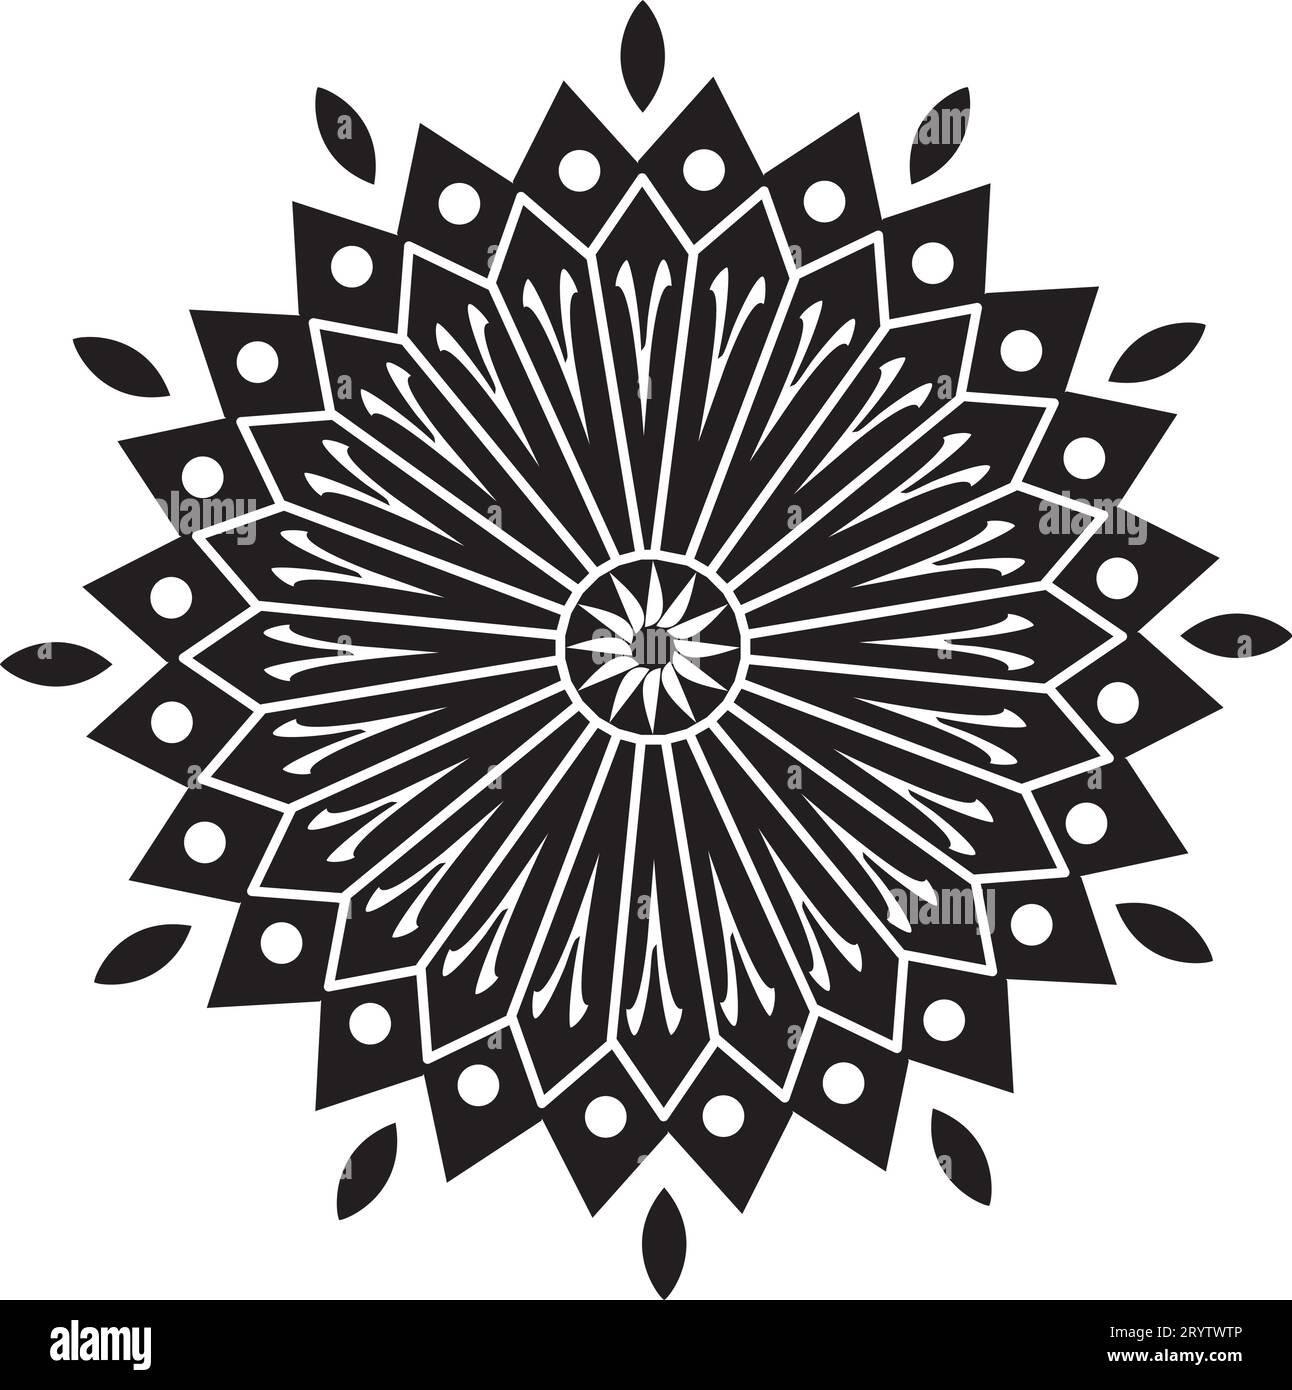 Mandala - Flower Star Sun Illustration, Nature, Energy Circle Round Beautiful Symmetry Harmony Symbol in Black and White Stock Vector